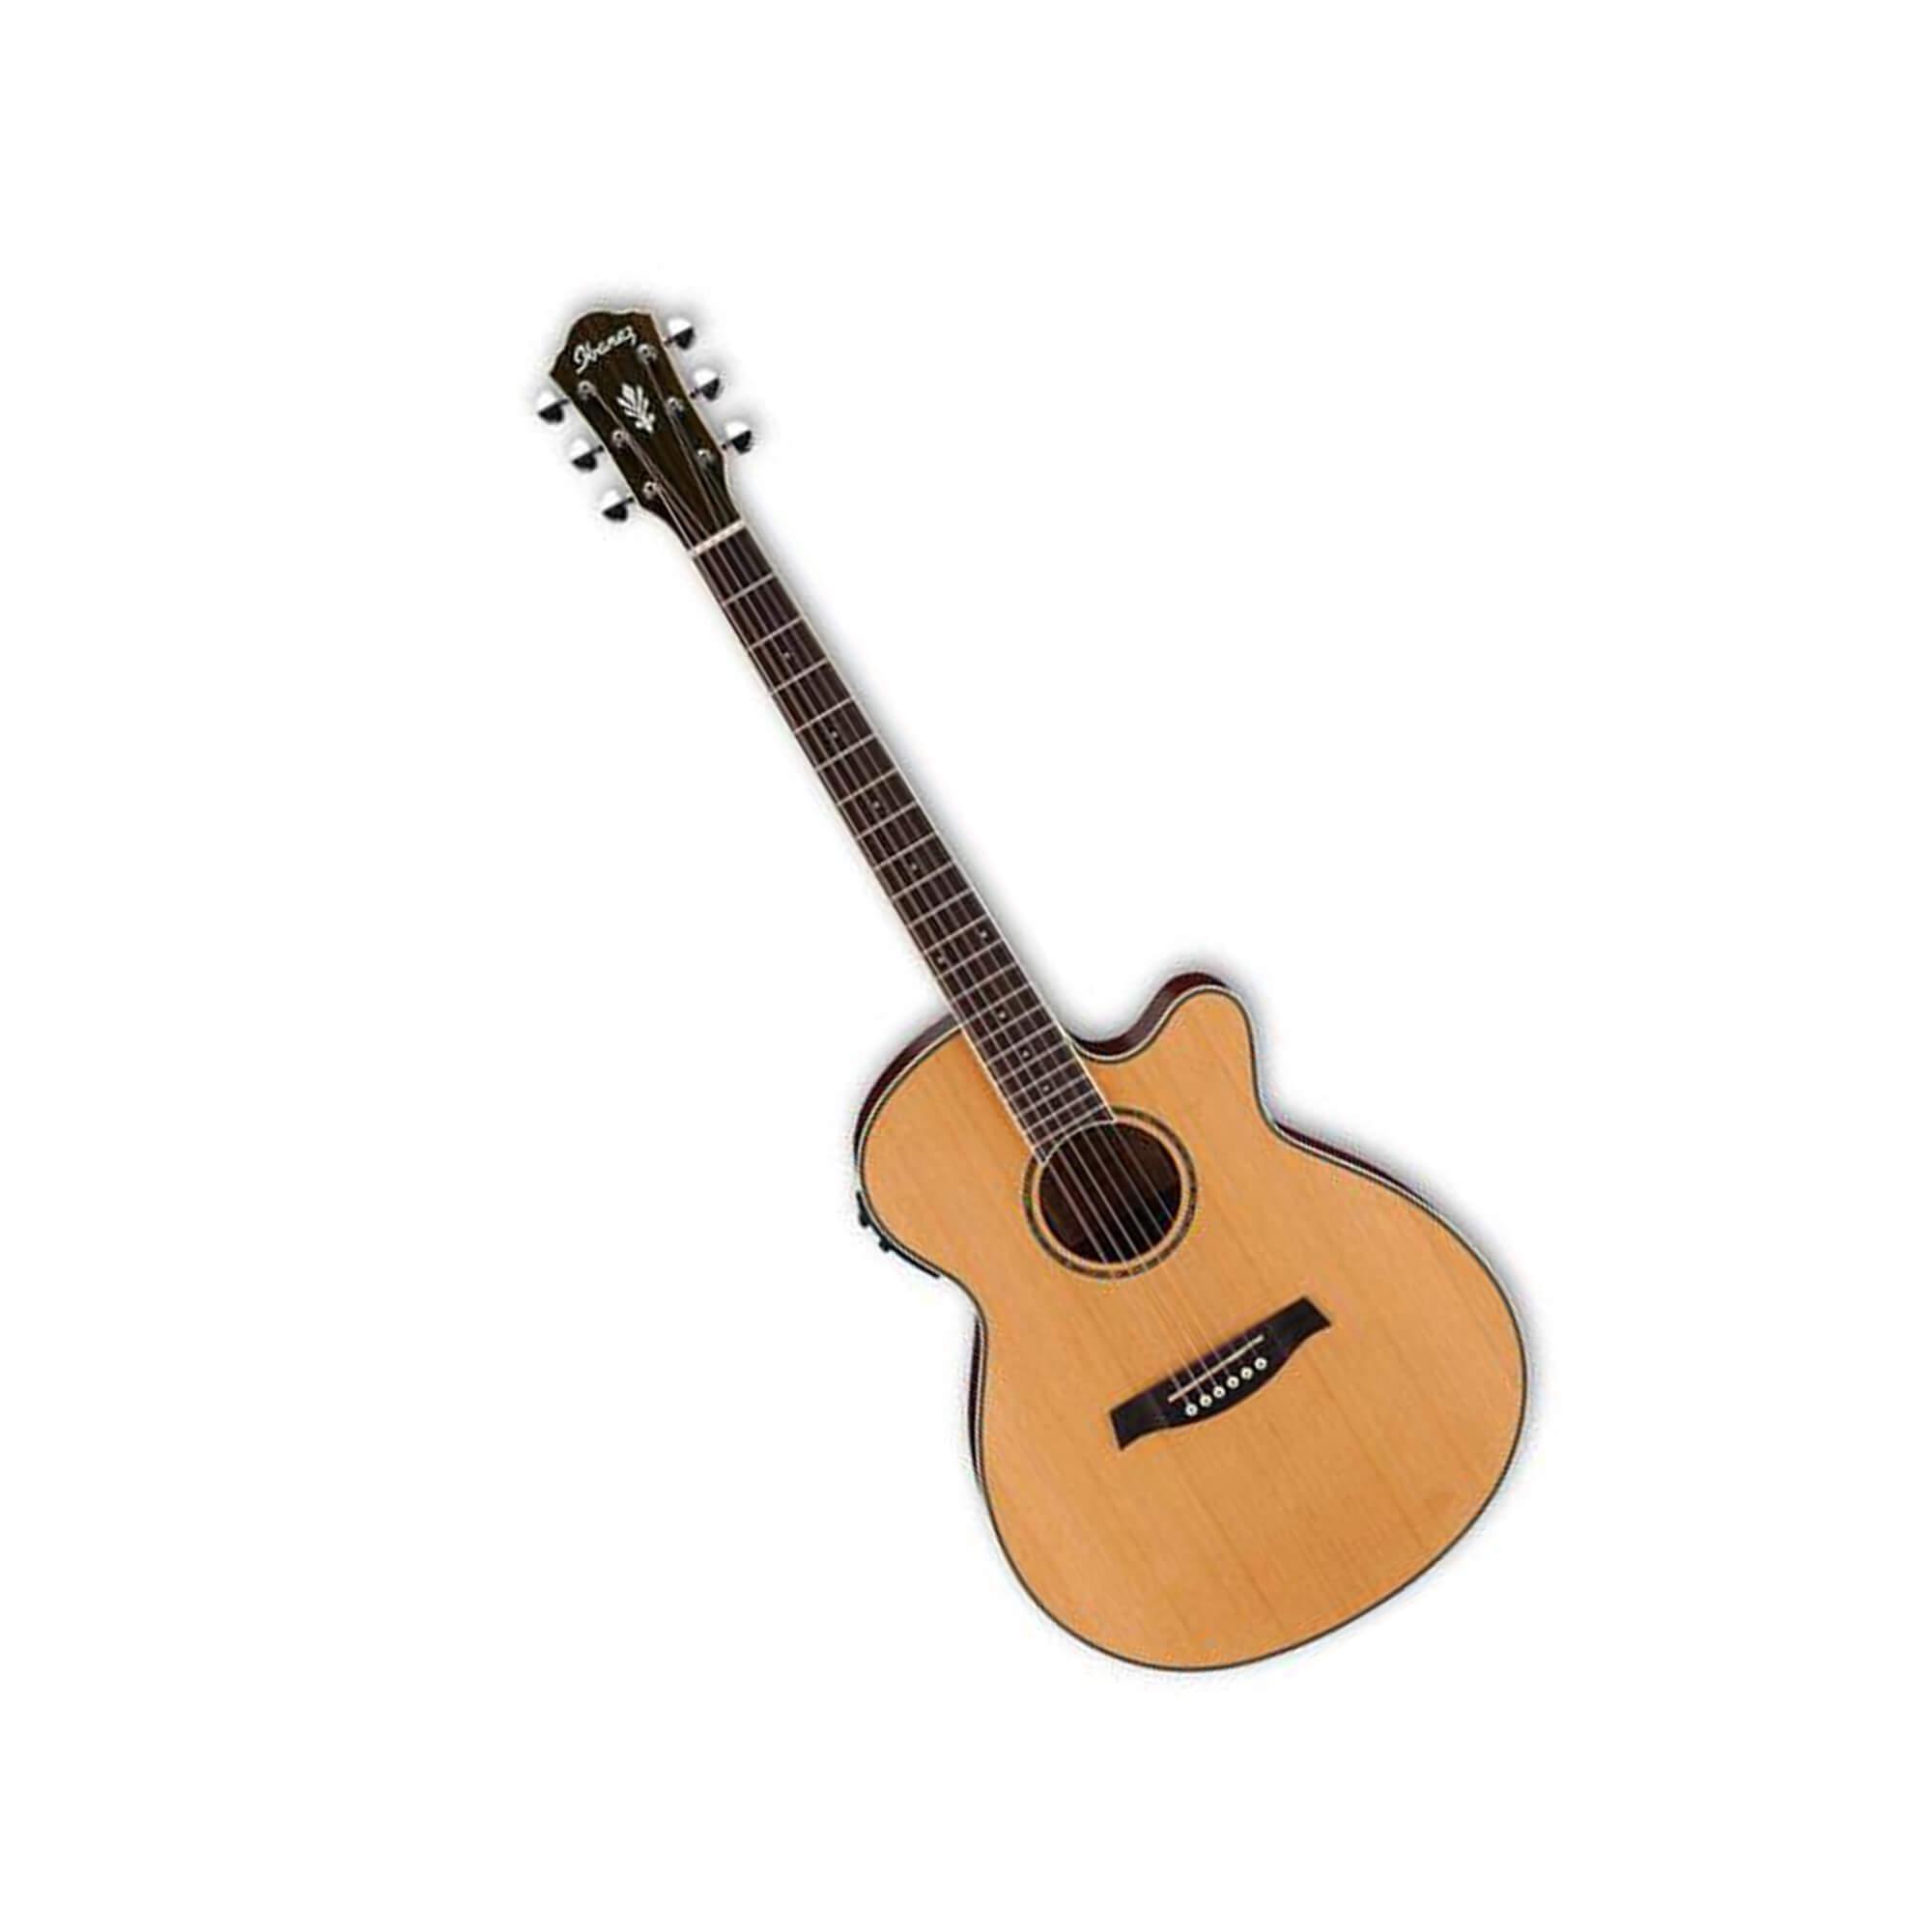 Ibañez - Guitarra Electroacústica AEG, Color Natural Mate Mod.AEG15II-LG_10